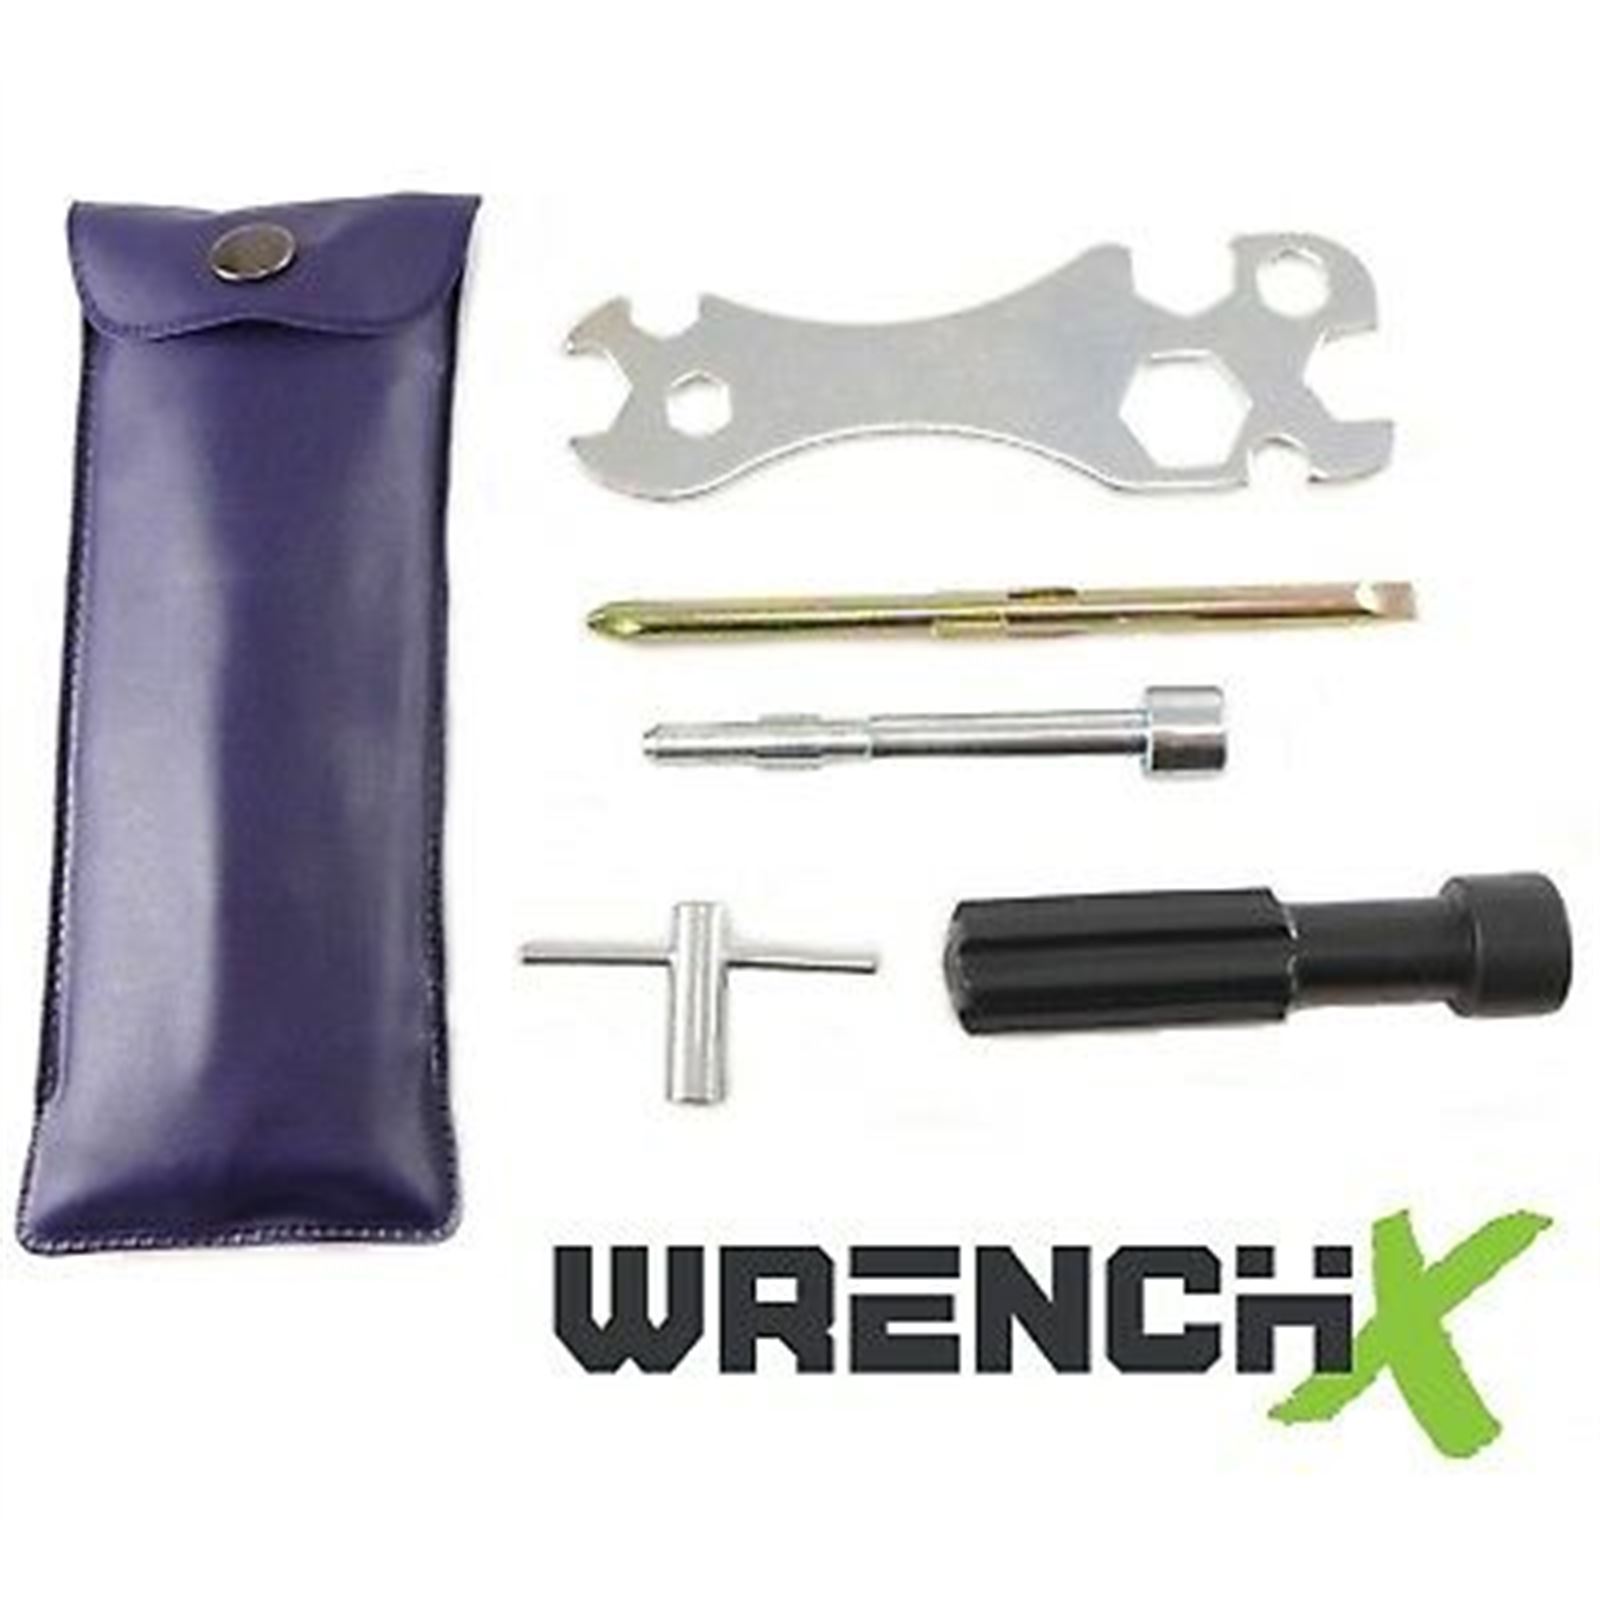 Wrench-X Products - Motorcycle, ATV / UTV & Powersports Parts